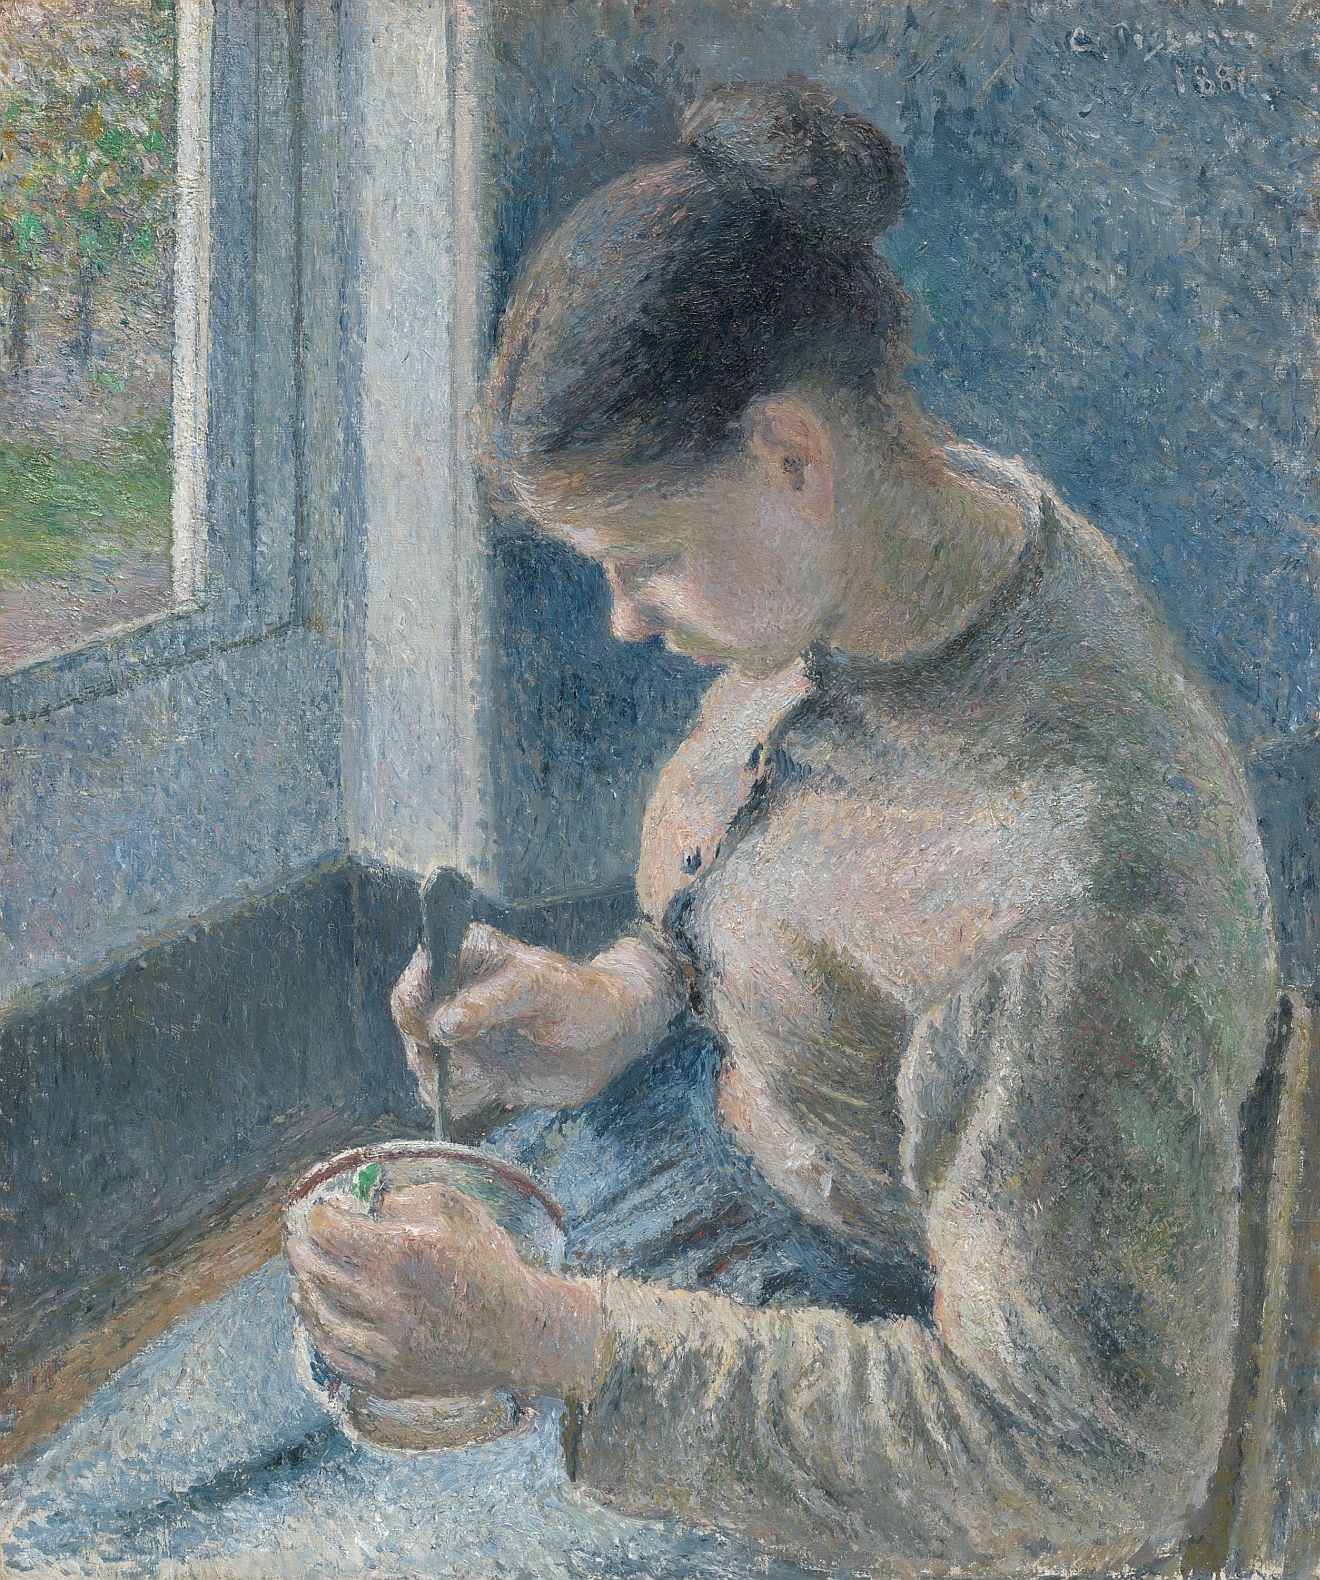 Camille+Pissarro-1830-1903 (291).jpg